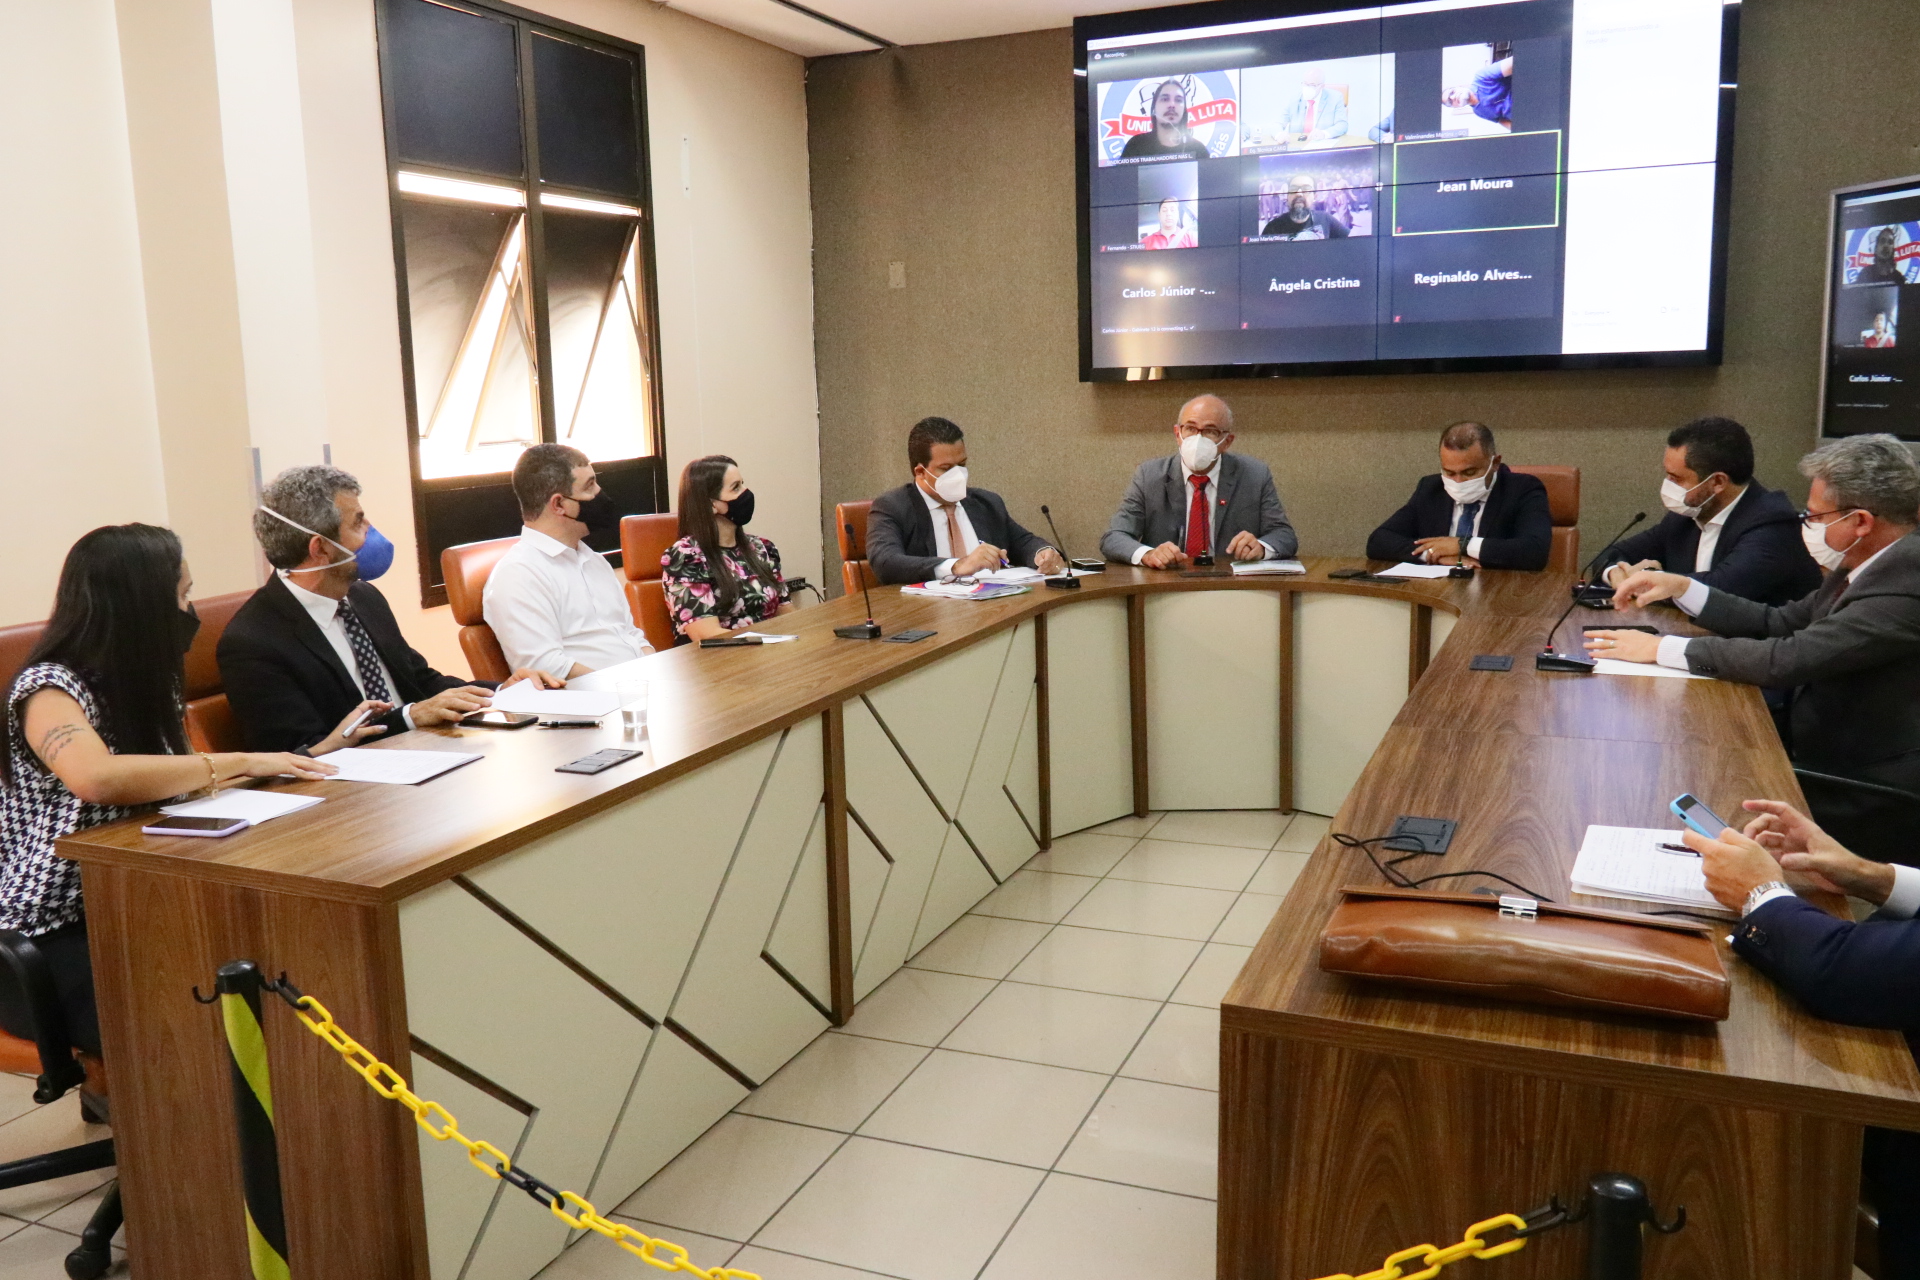 Superintendente do Procon Goiás e presidente do Procon Goiânia são os primeiros ouvidos na CEI da Enel